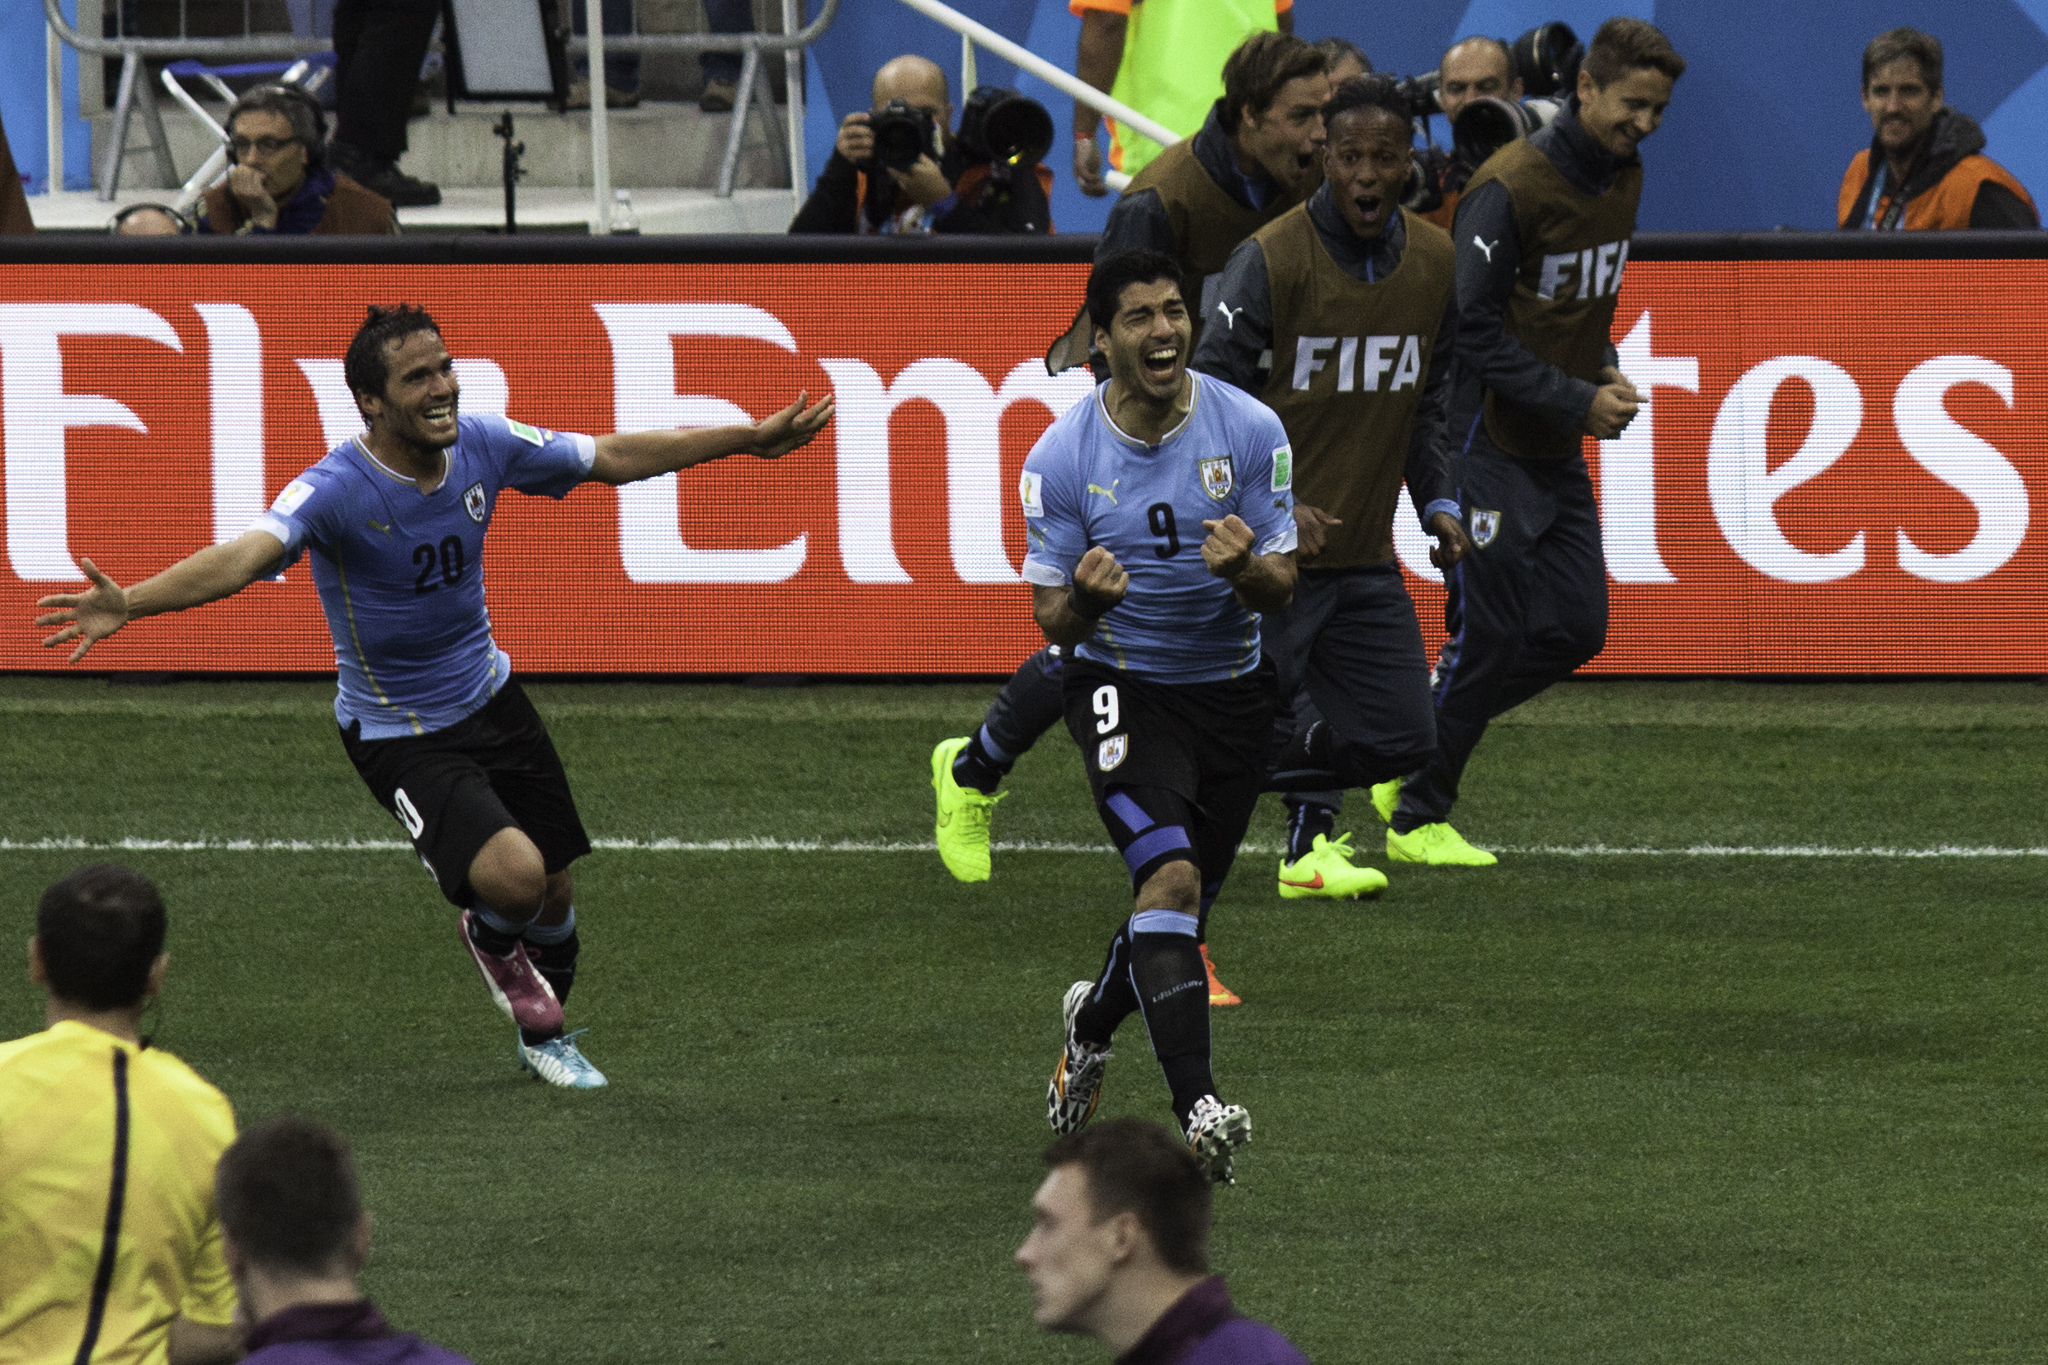 FIFA World Cup 2014 - Uruguay 2 - England 1 - 140619-6454-jikatu (14282608880).jpg